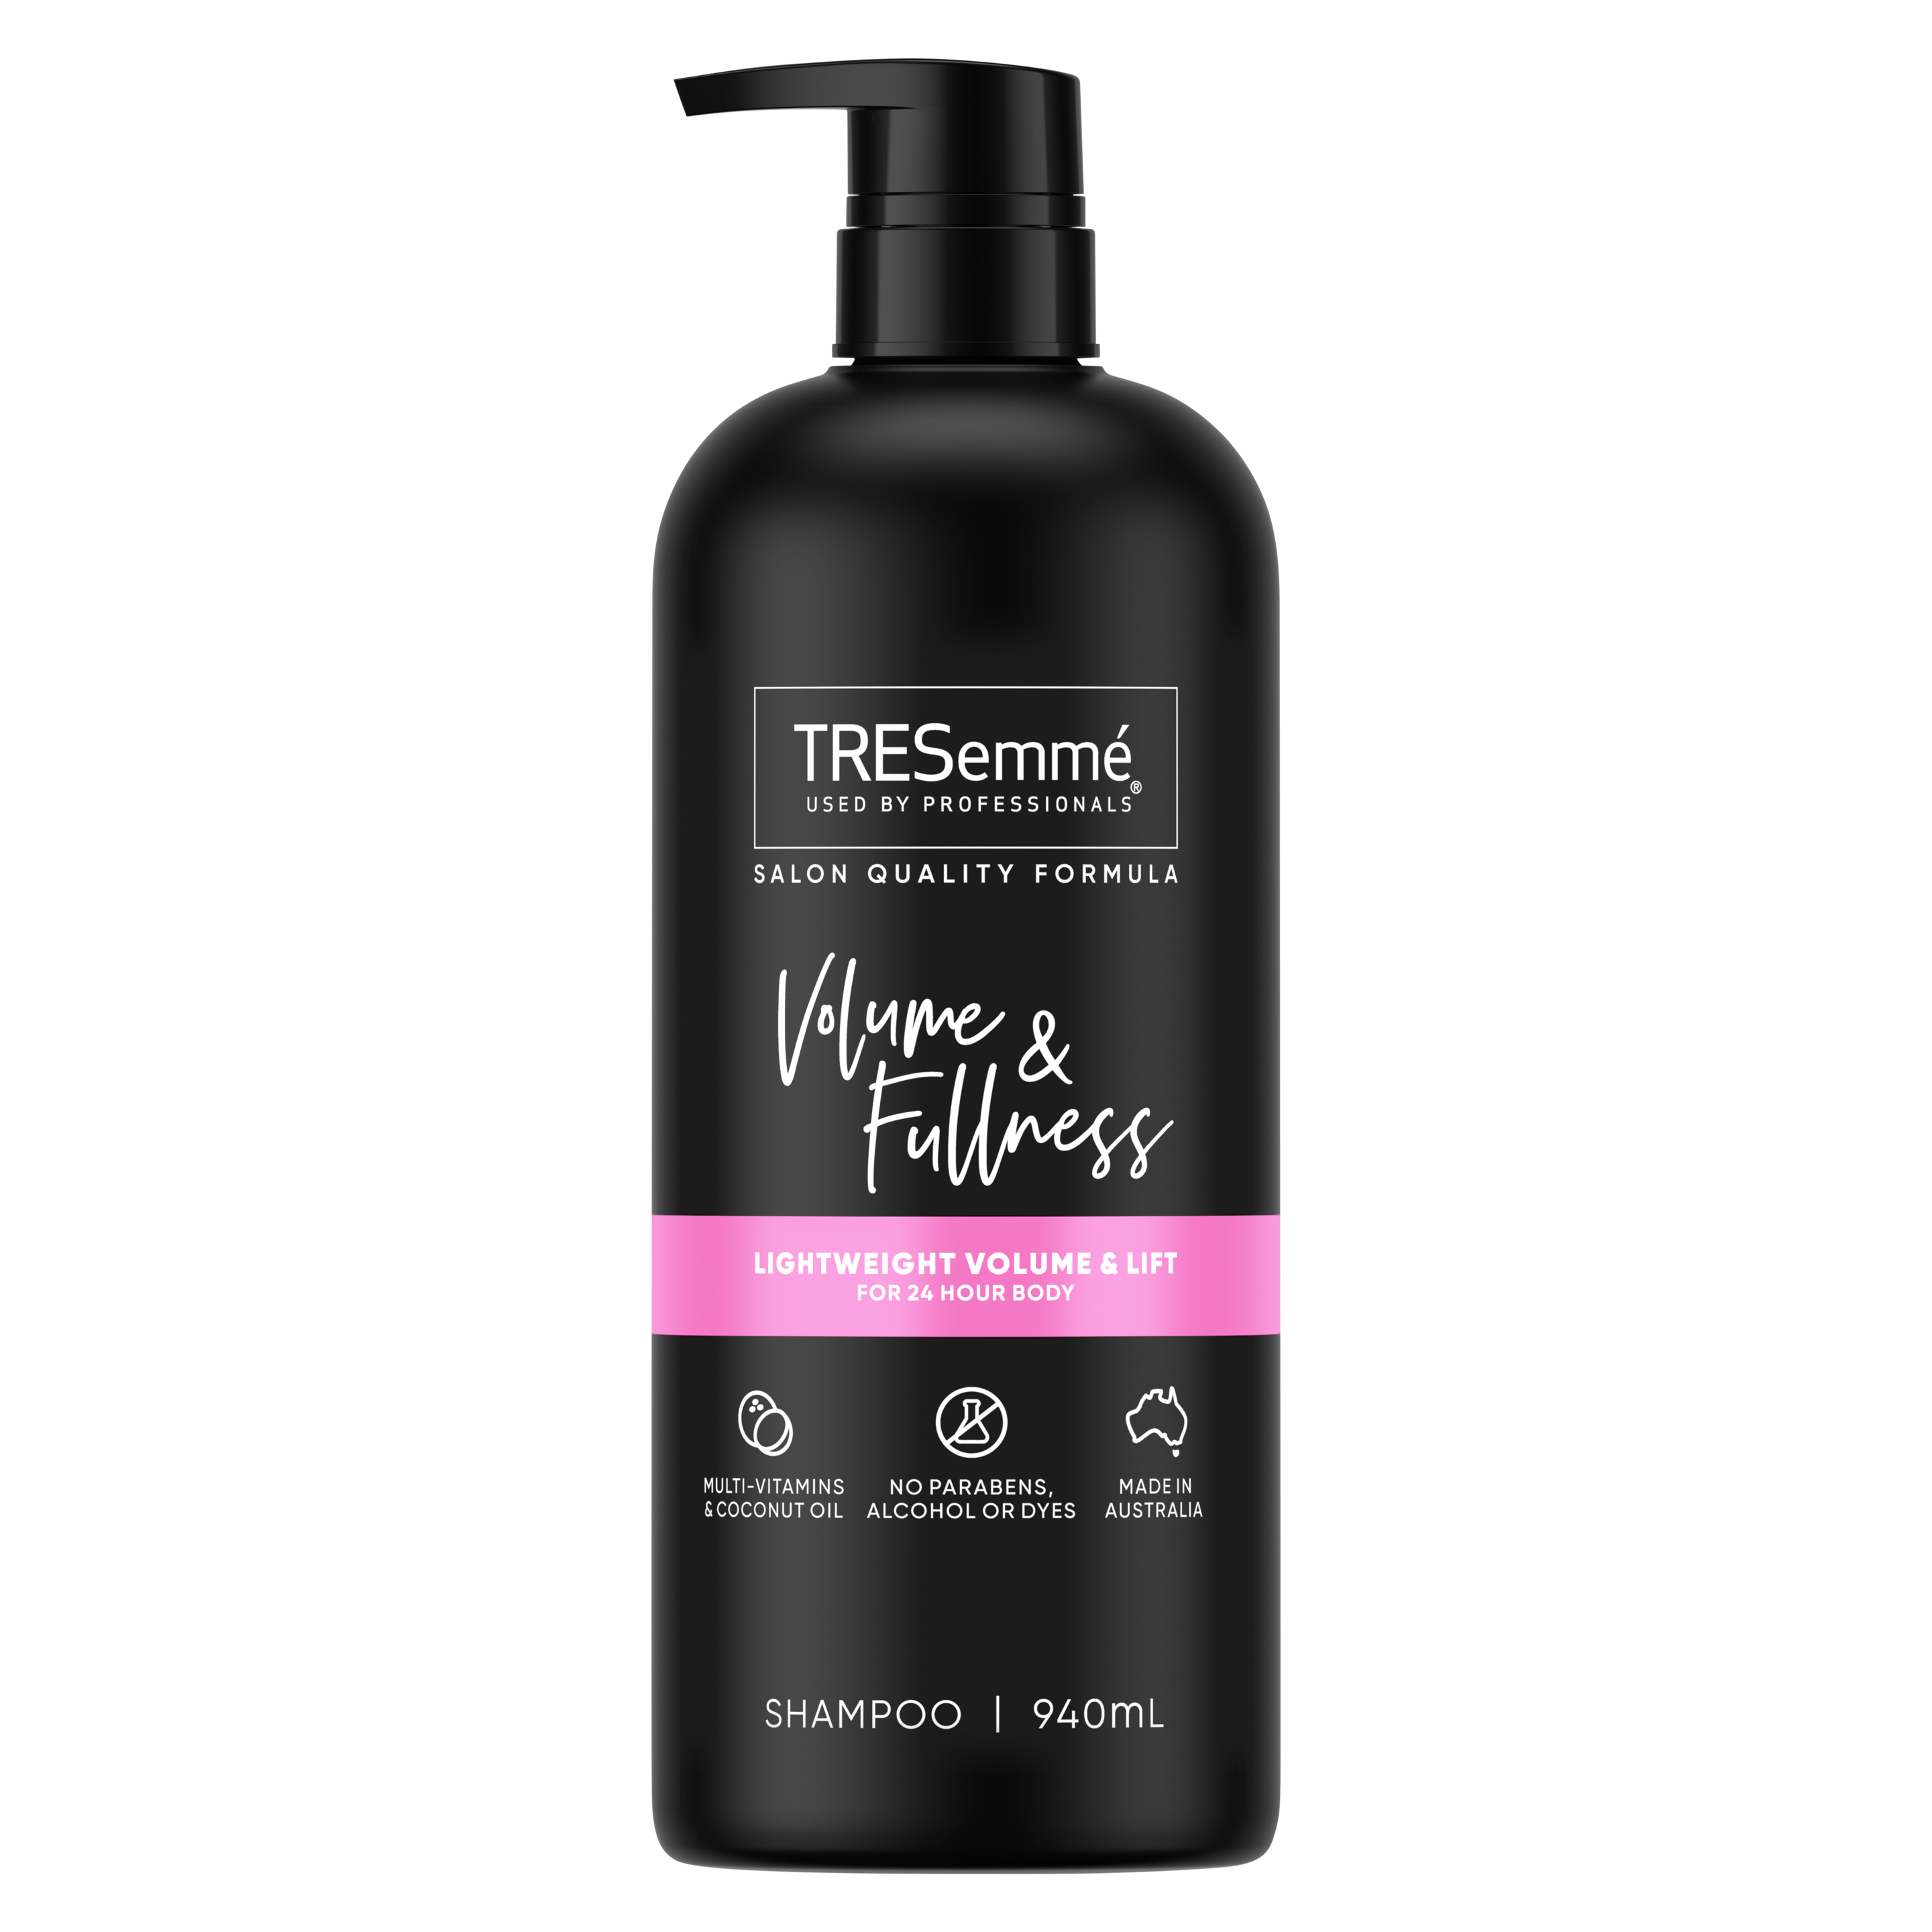 A 940ml bottle of TRESemmé Volume & Fullness Shampoo